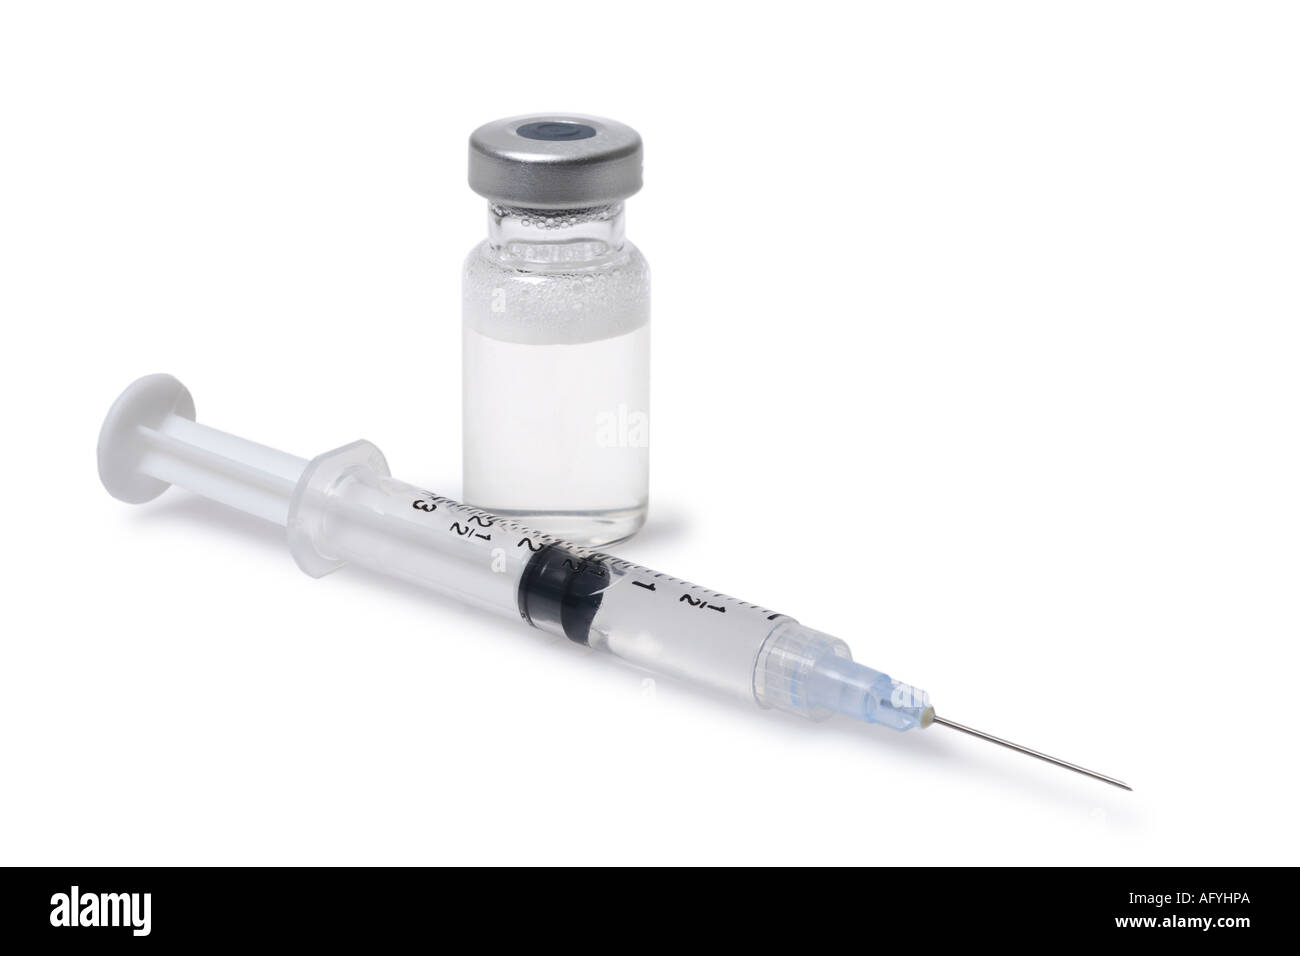 Syringe and Medication Still Life Stock Photo